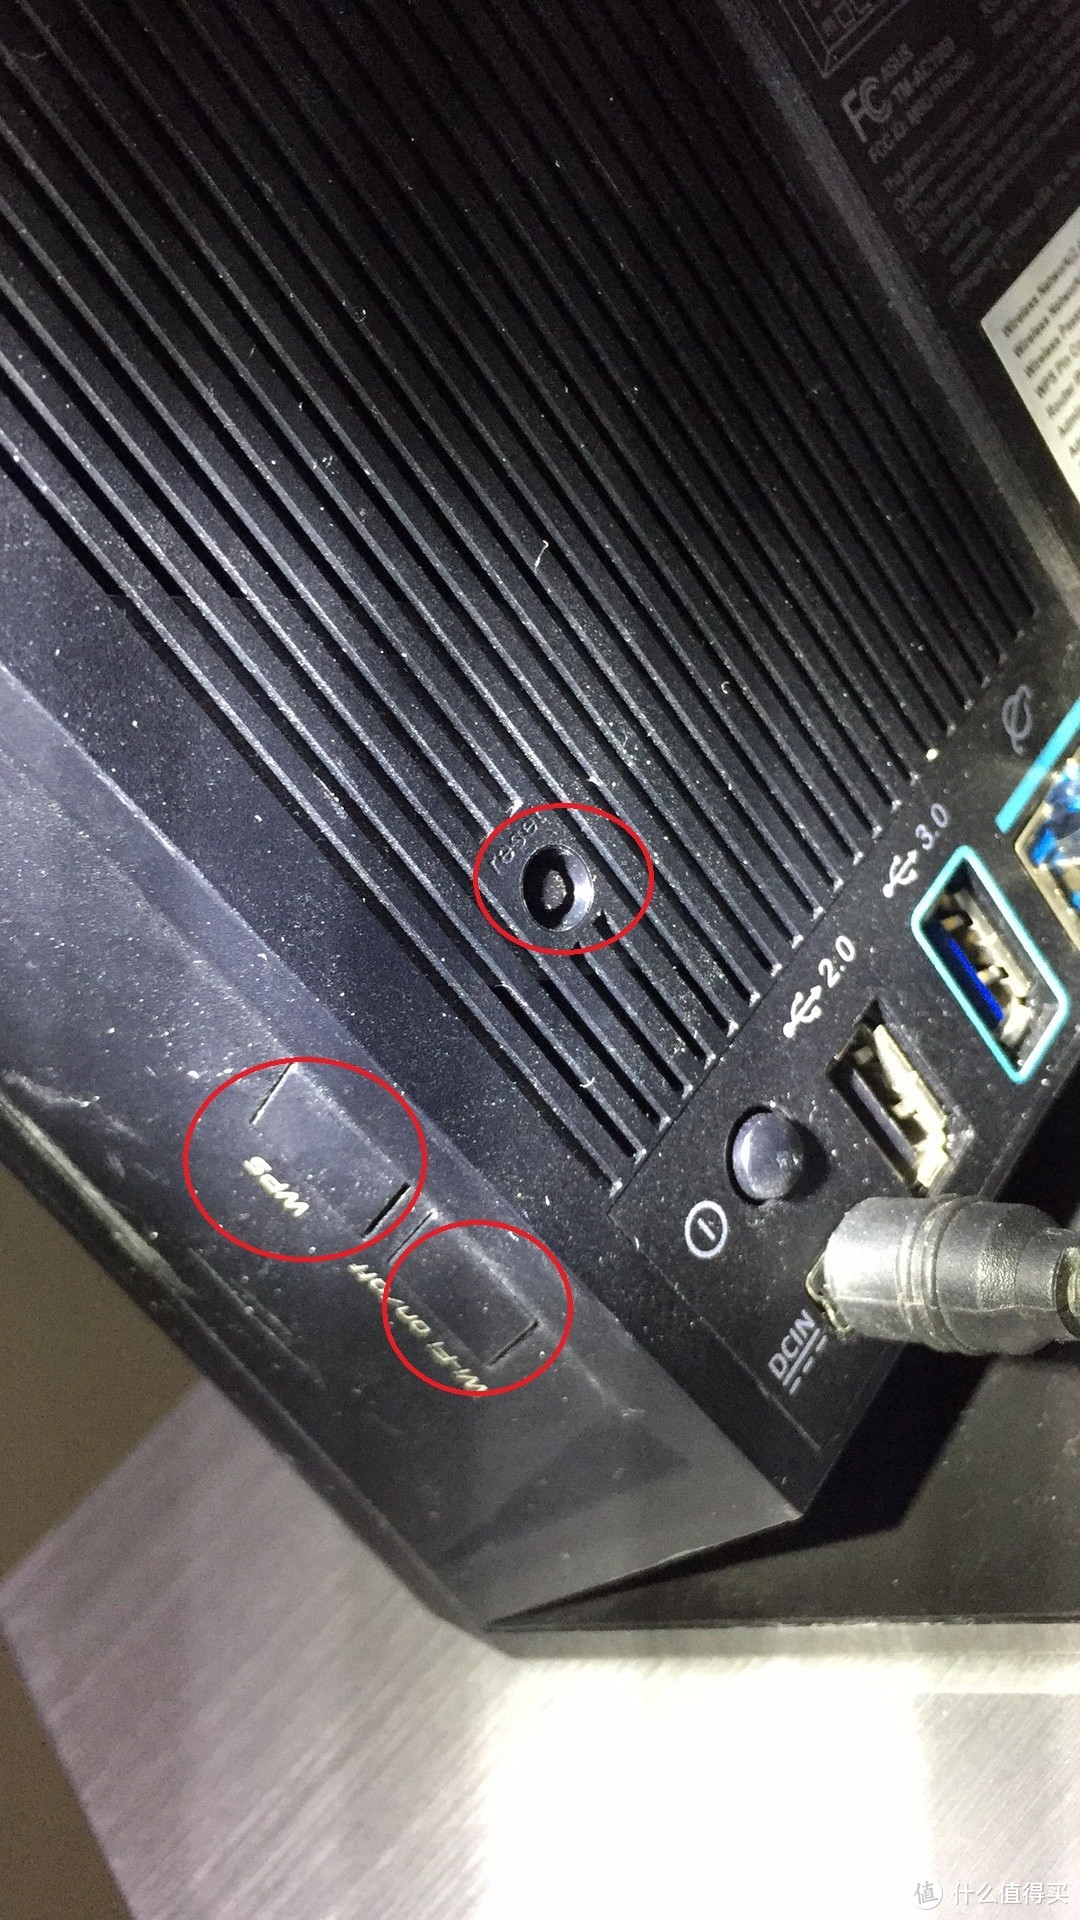 TM-AC1900 刷ASUS 68u固件及魔都IPTV 桥接